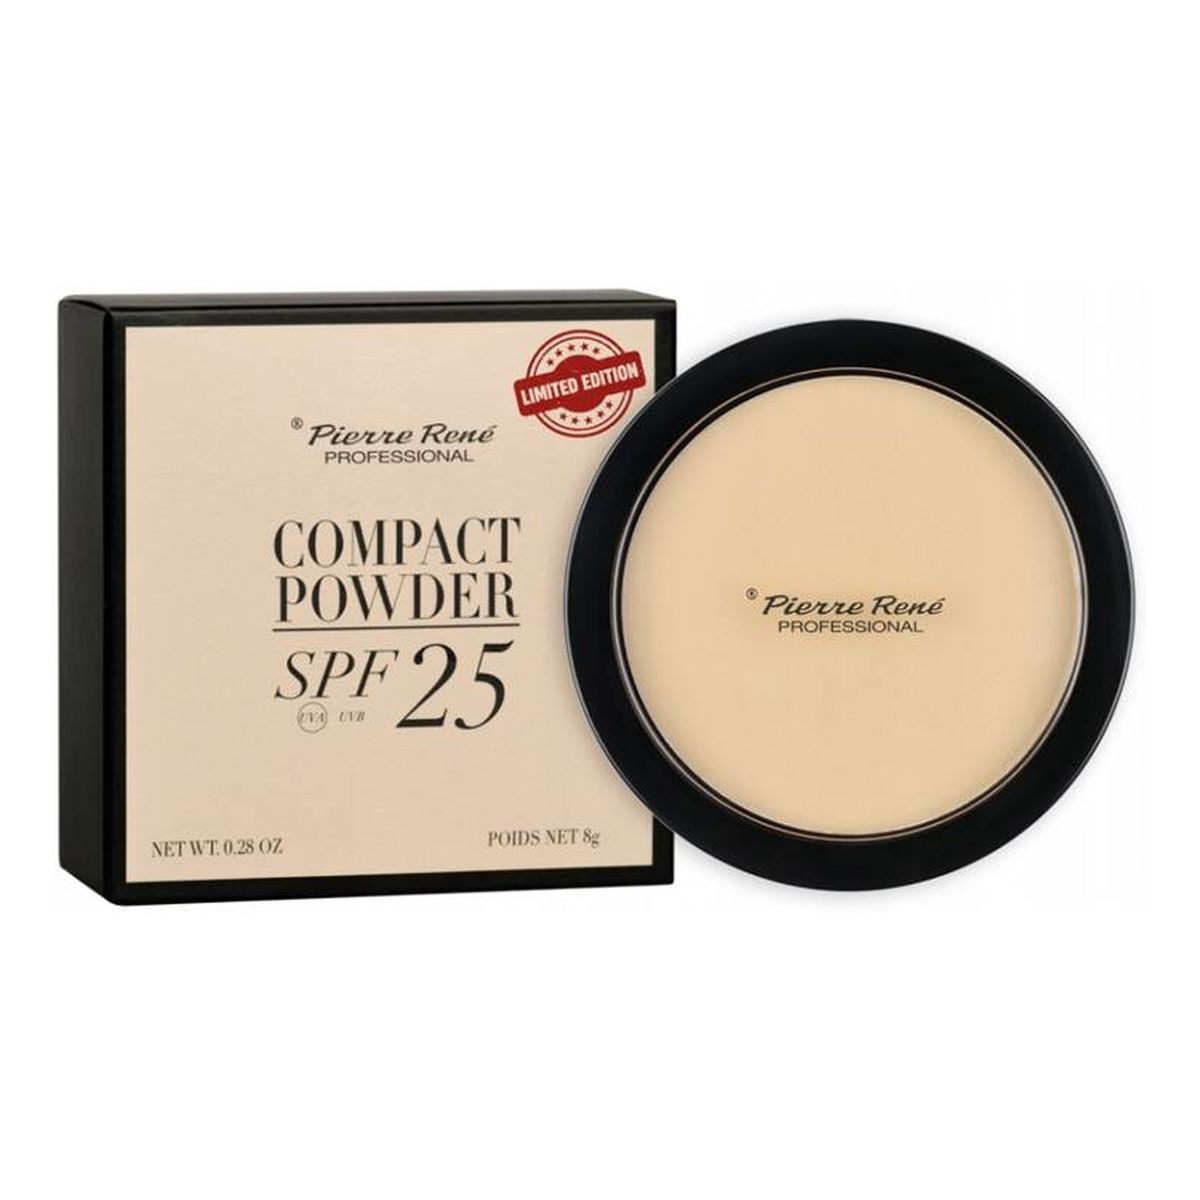 Pierre Rene Professional Compact Powder SPF25 Limited puder prasowany 8g